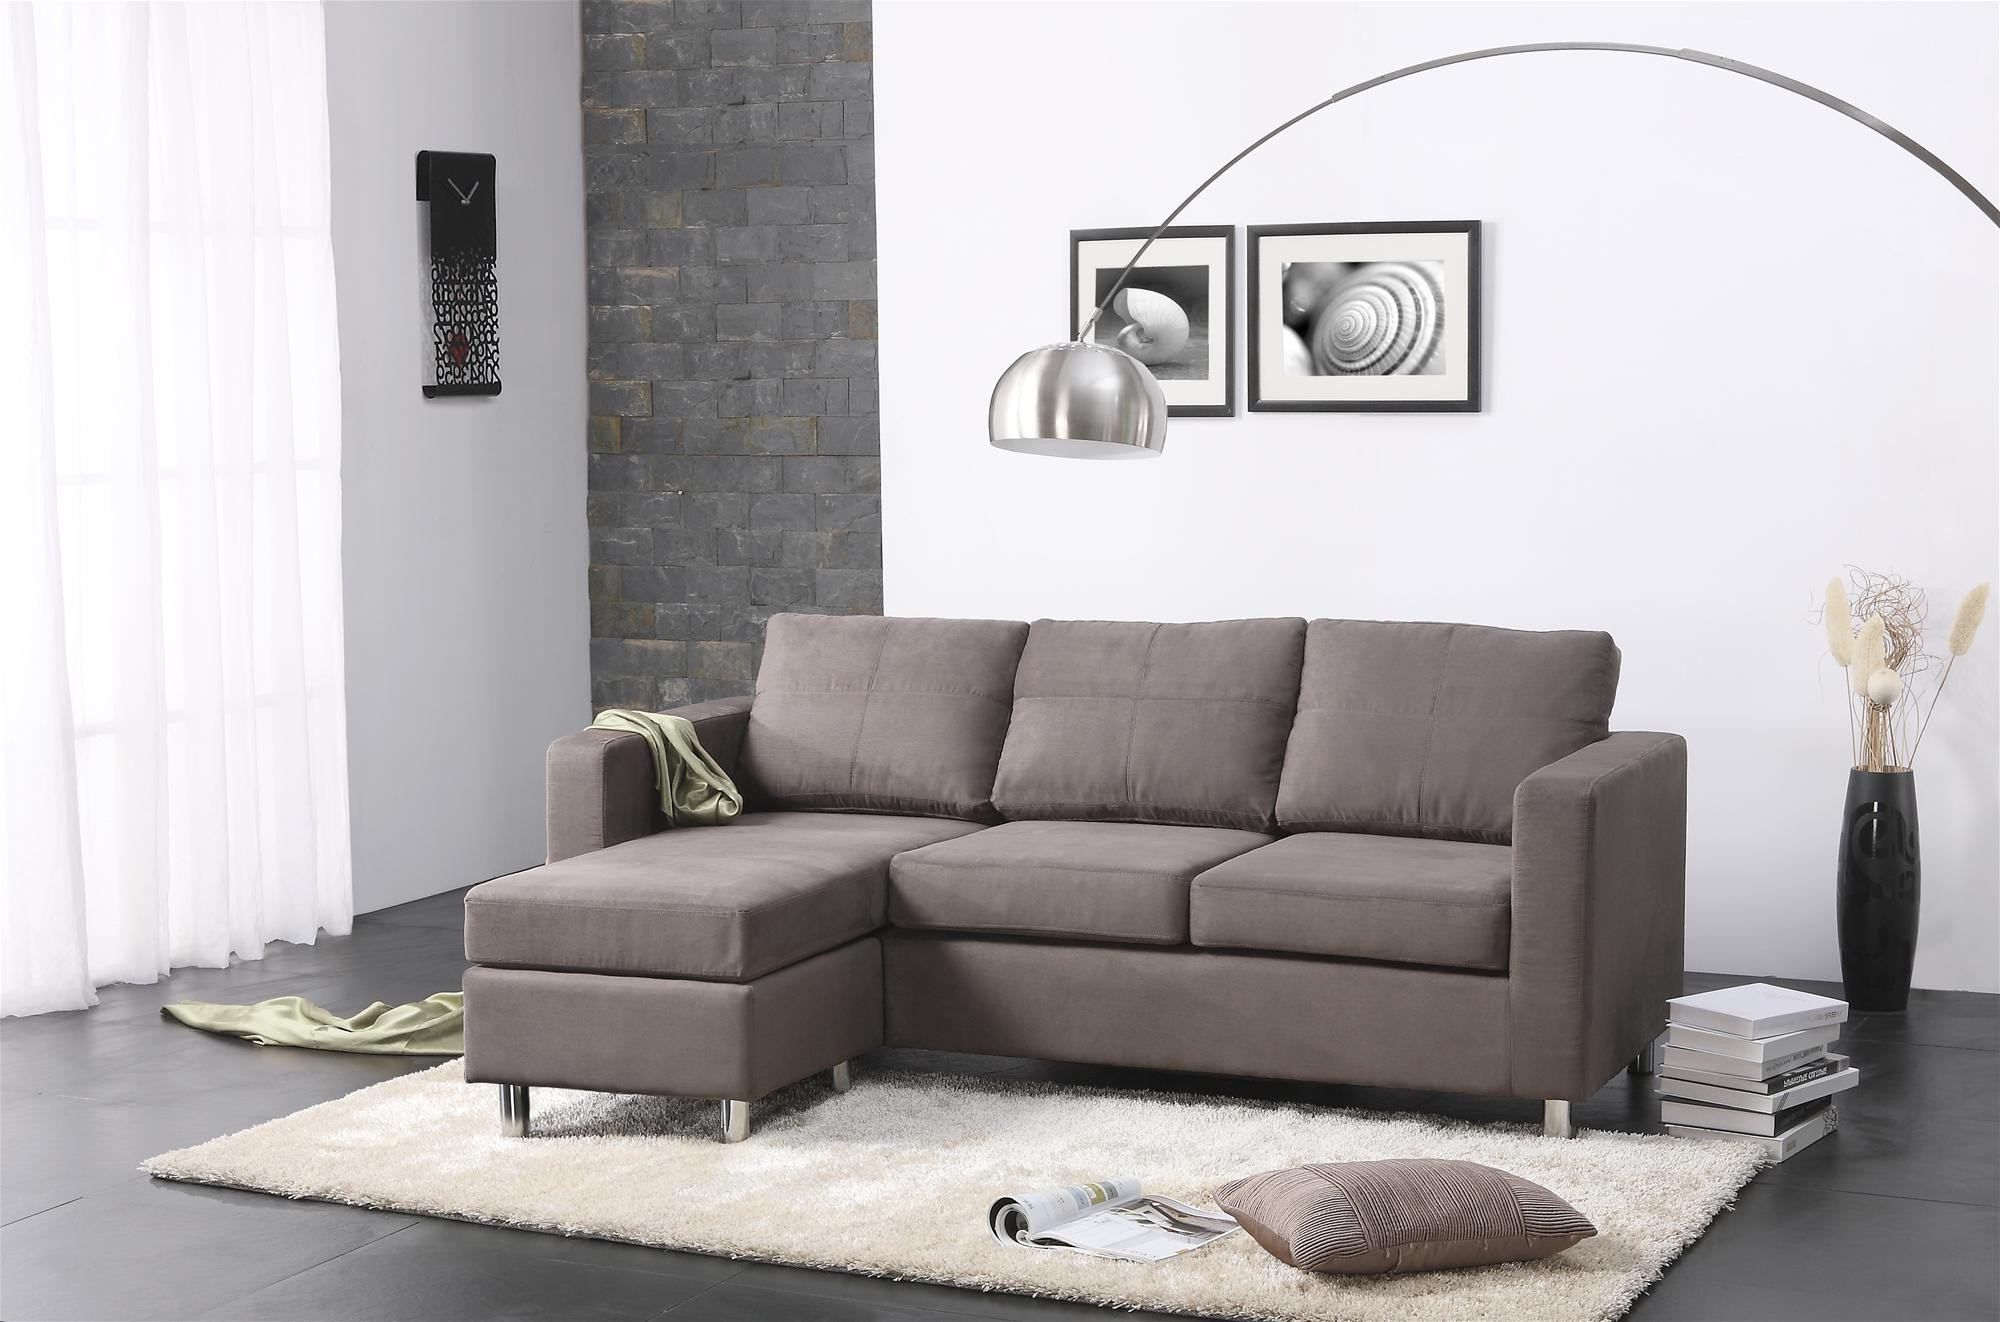 21 Sensational sofa for Small Living Room - Home Decoration and